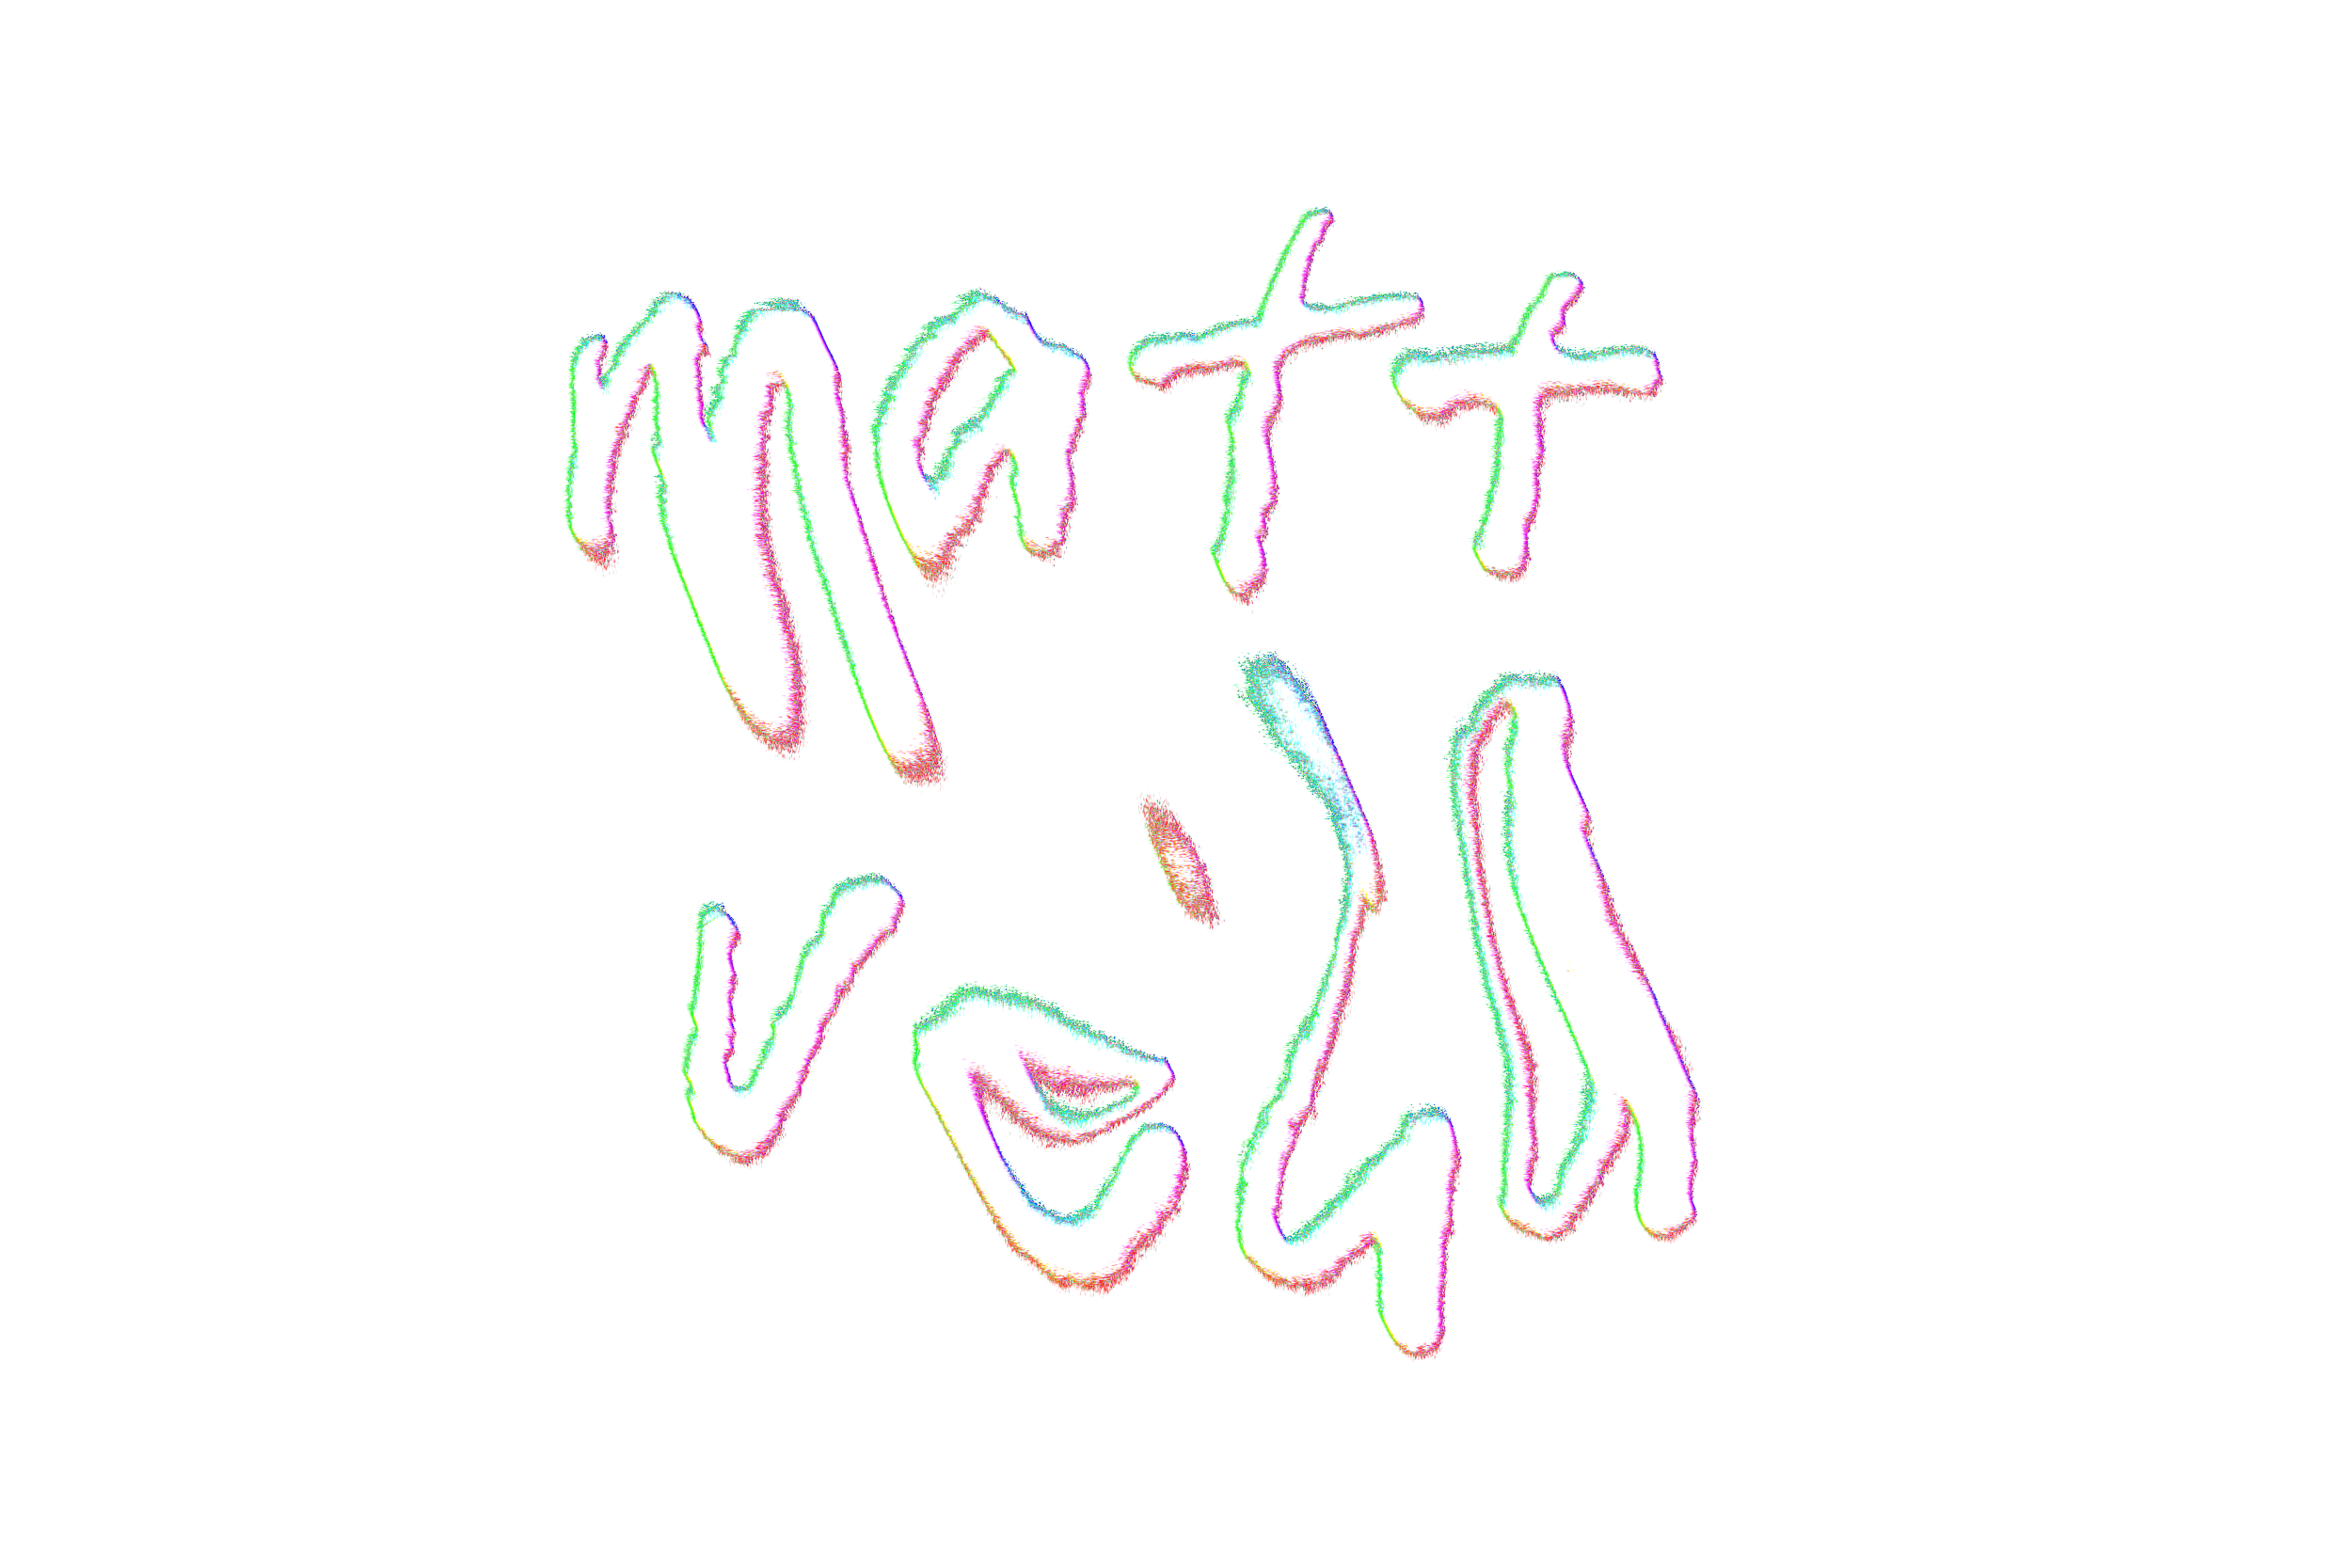 Matt Vega - Director